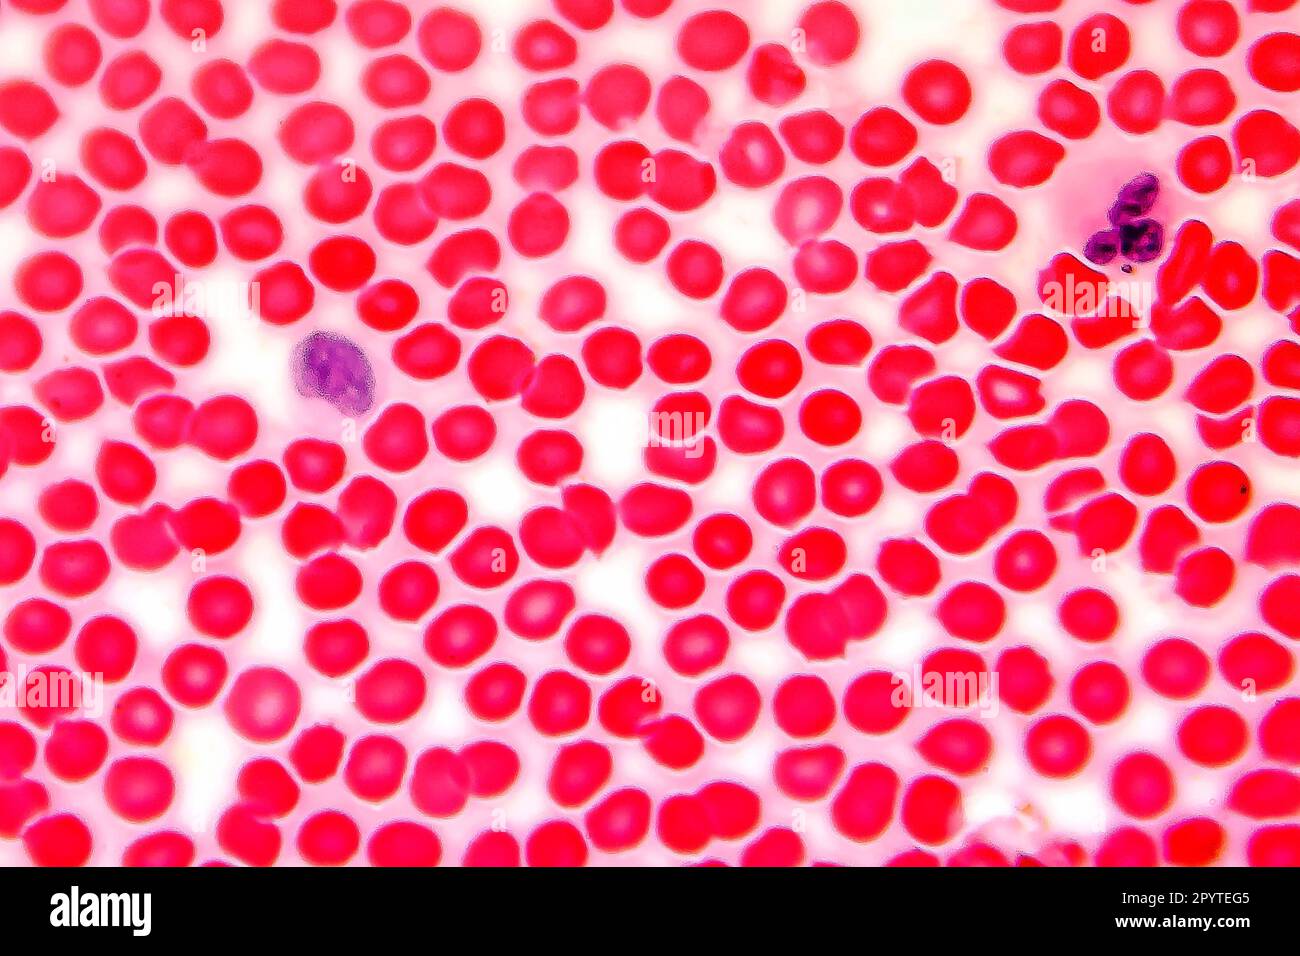 Human blood smear under microscope, light photomicrograph Stock Photo